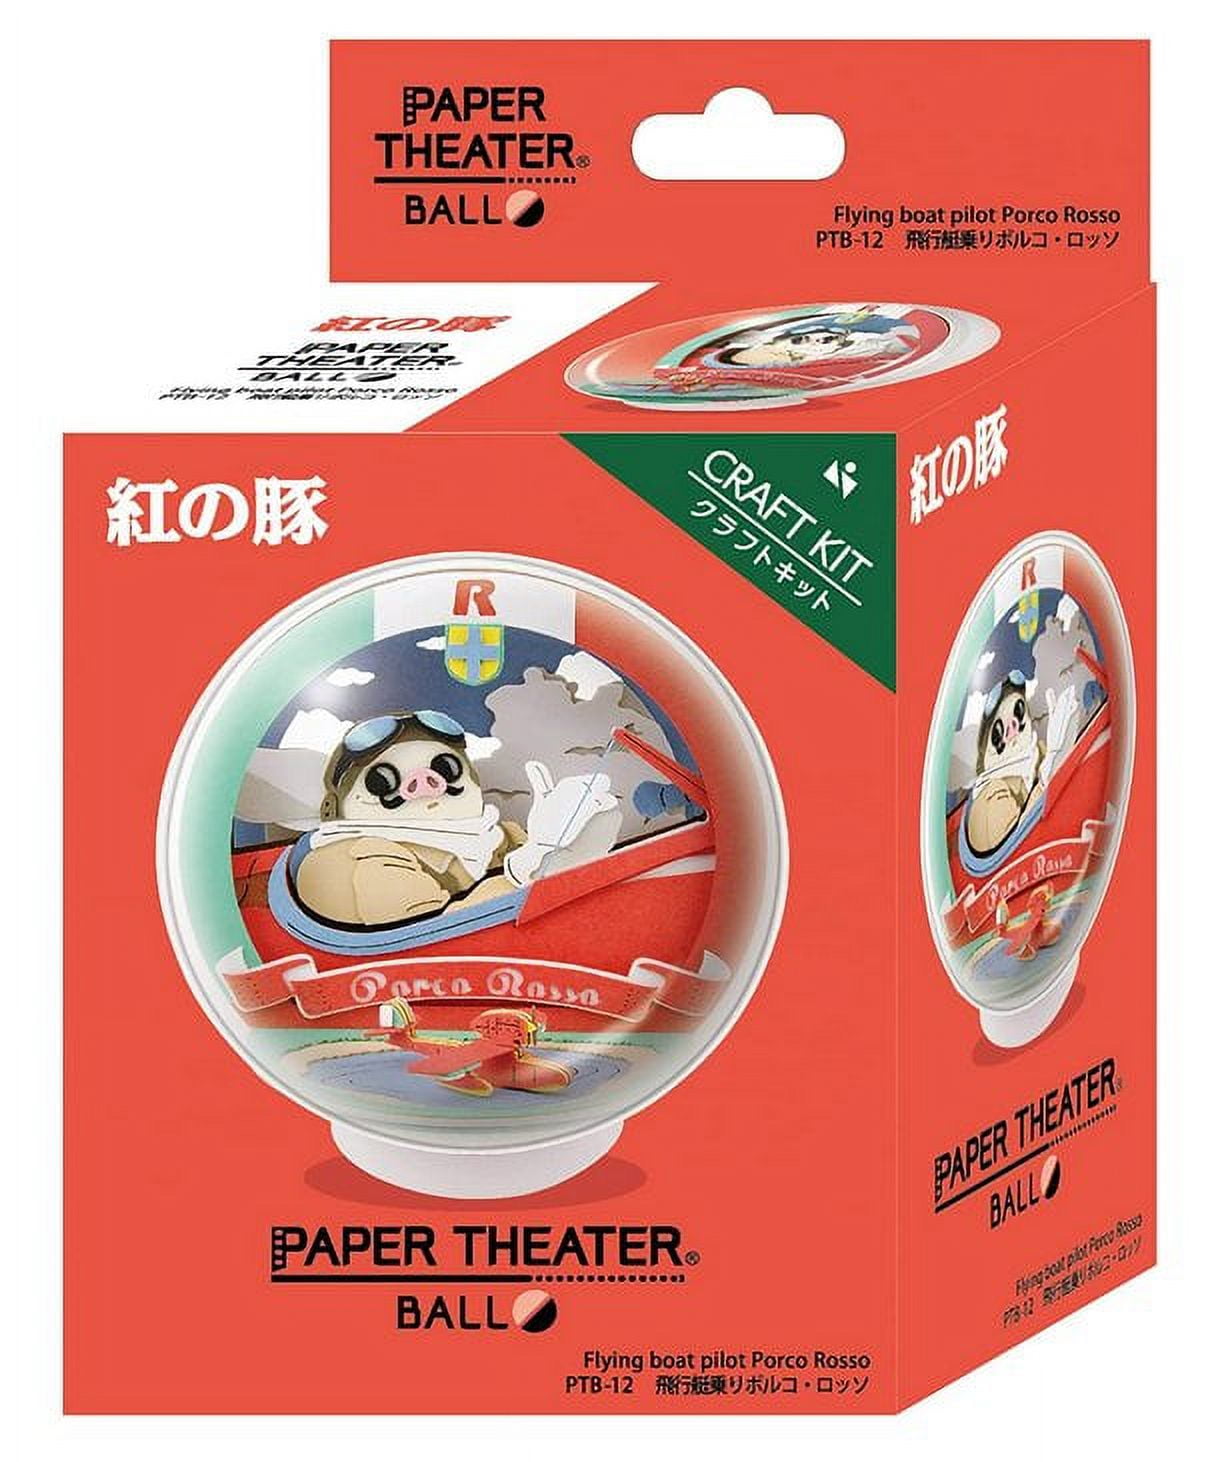 Studio Ghibli Porco Rosso Airplane Piloting Anime Paper Theater Ball 